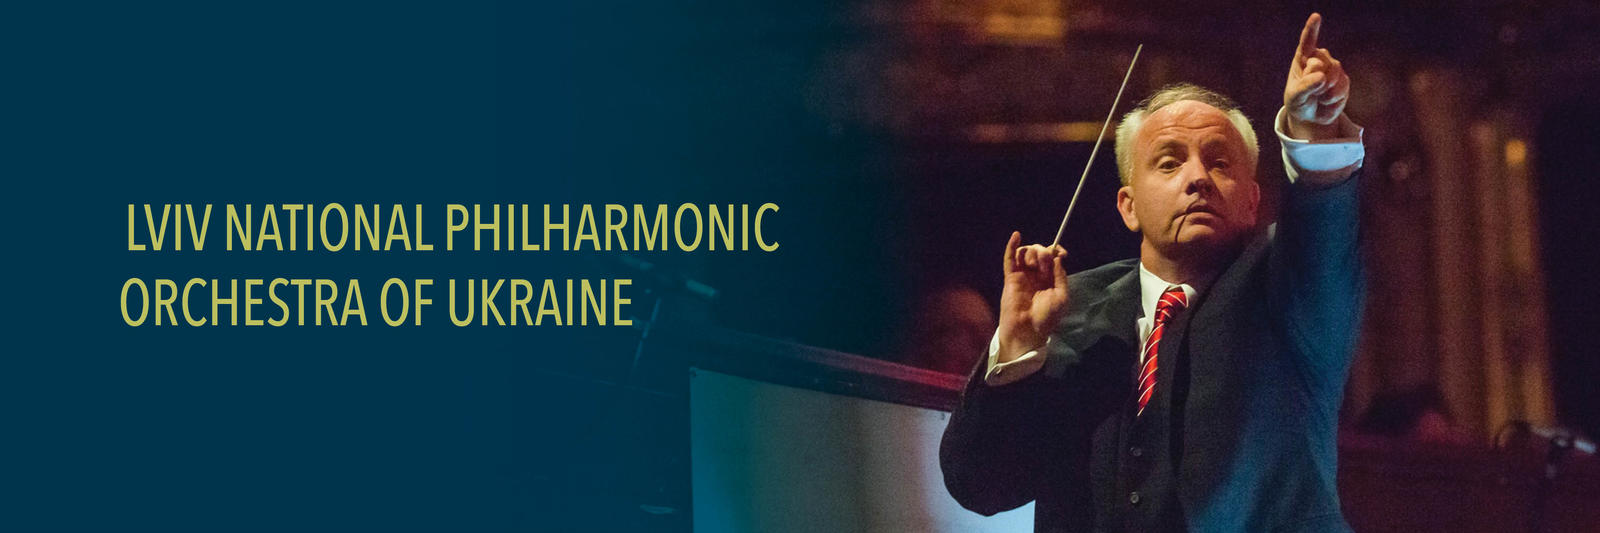  The Lviv National Philharmonic Orchestra of Ukraine 